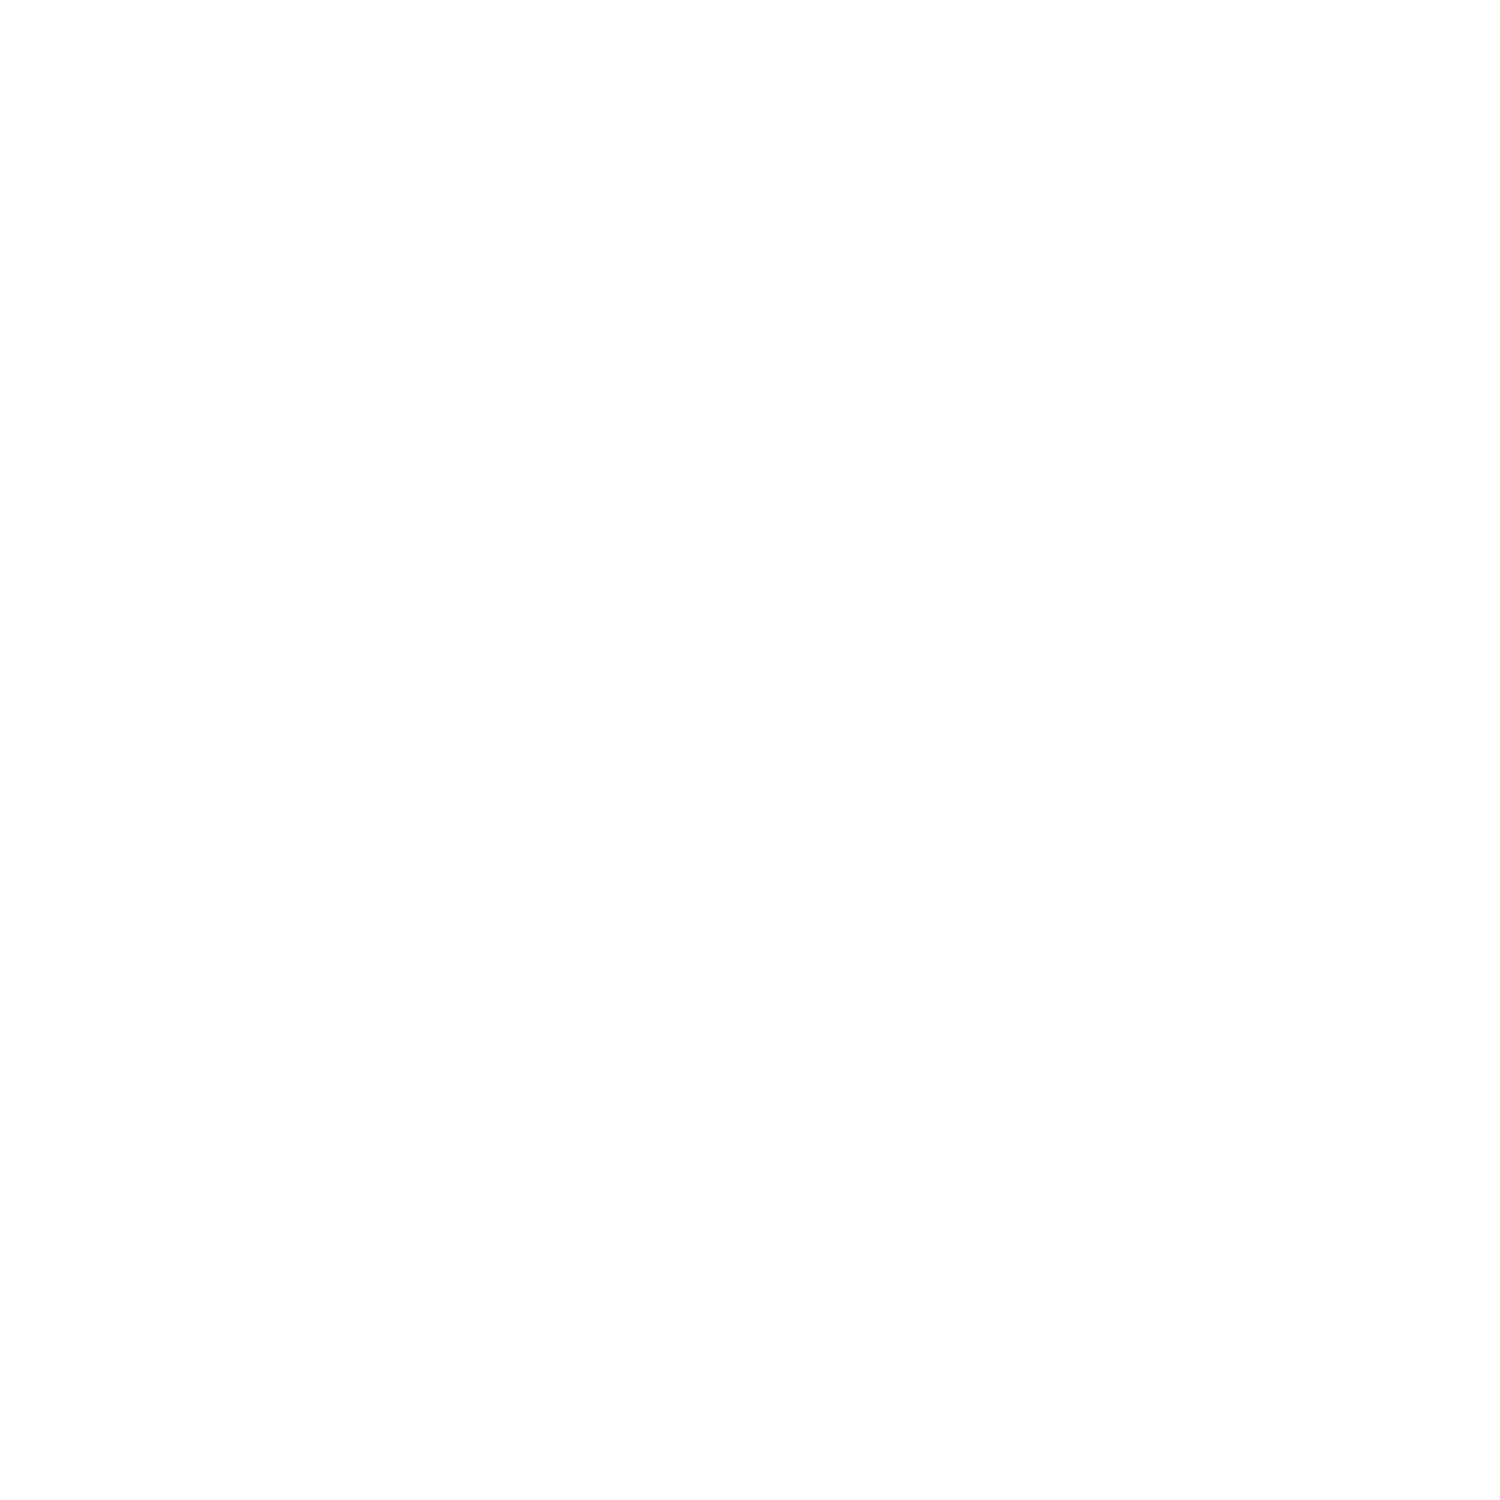 Dallas Sandwich Sundays